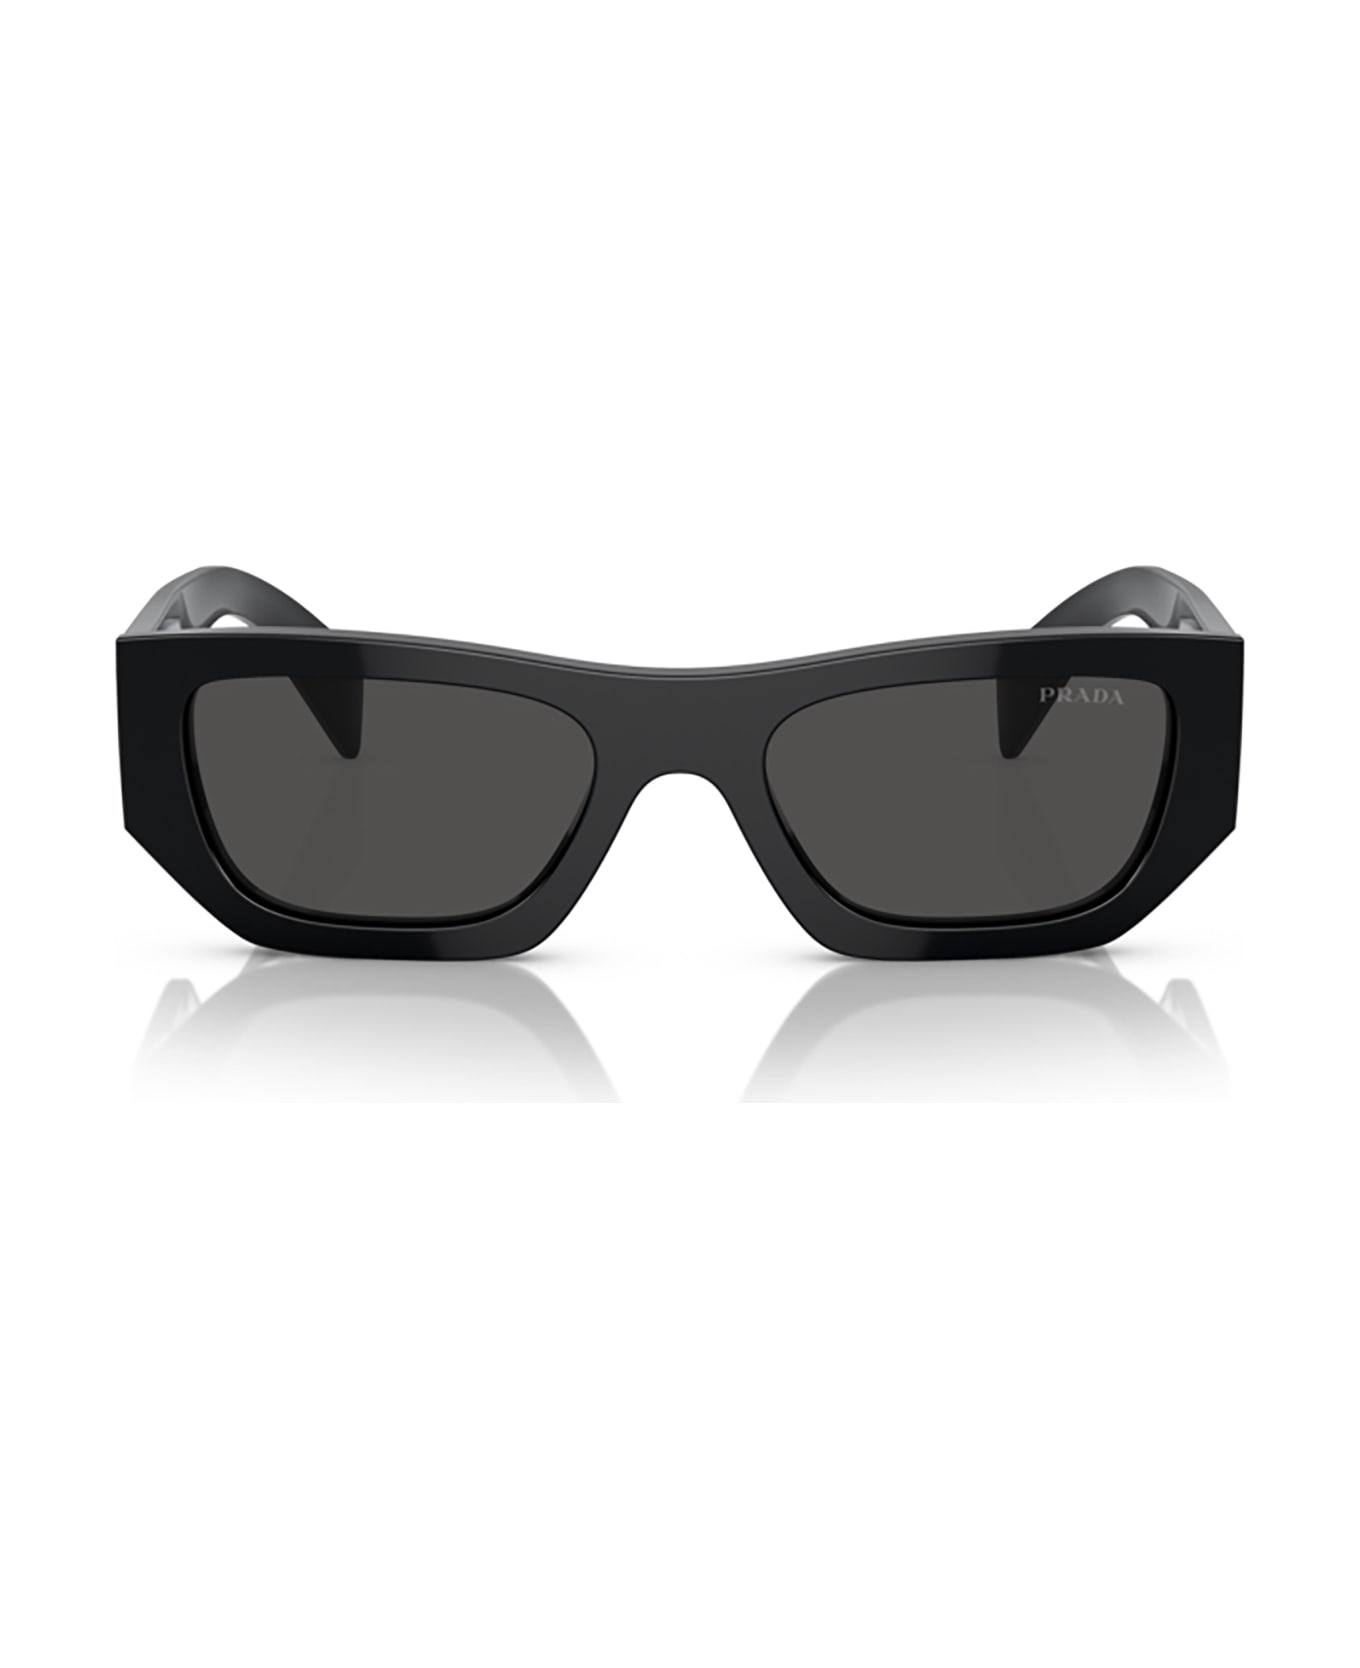 Prada Eyewear Pr A01s Black Sunglasses - Black